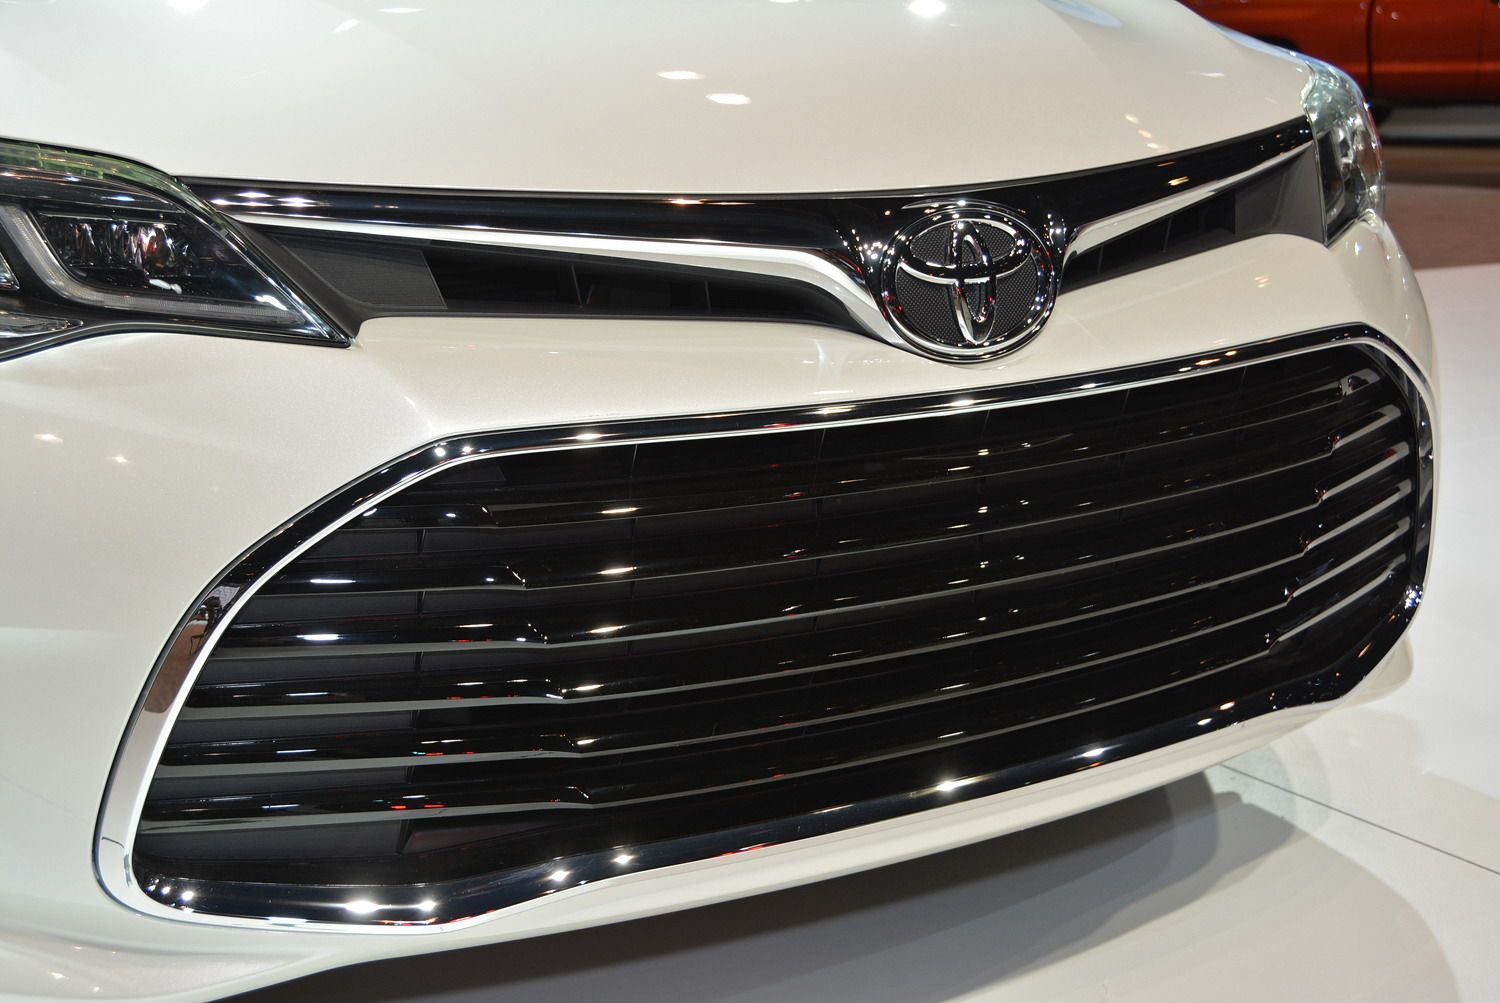 2016 Toyota Avalon